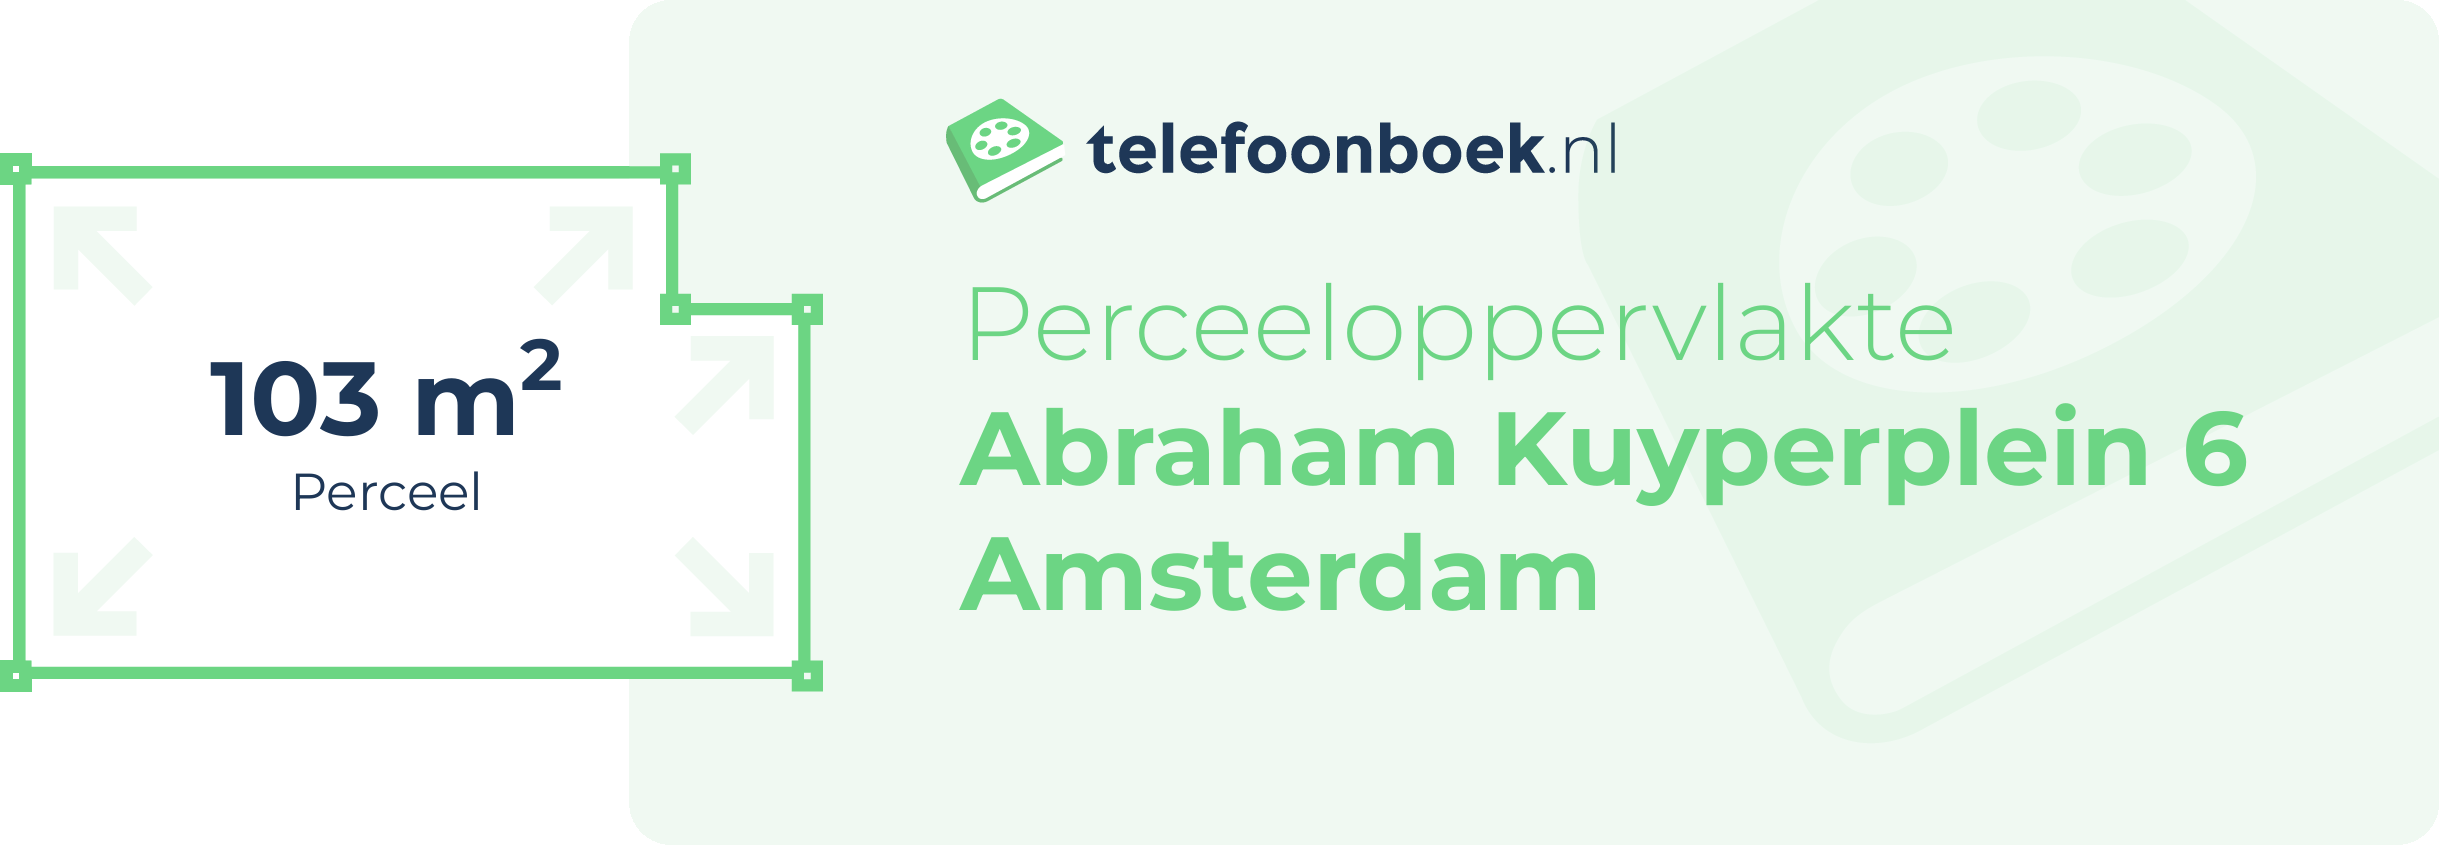 Perceeloppervlakte Abraham Kuyperplein 6 Amsterdam